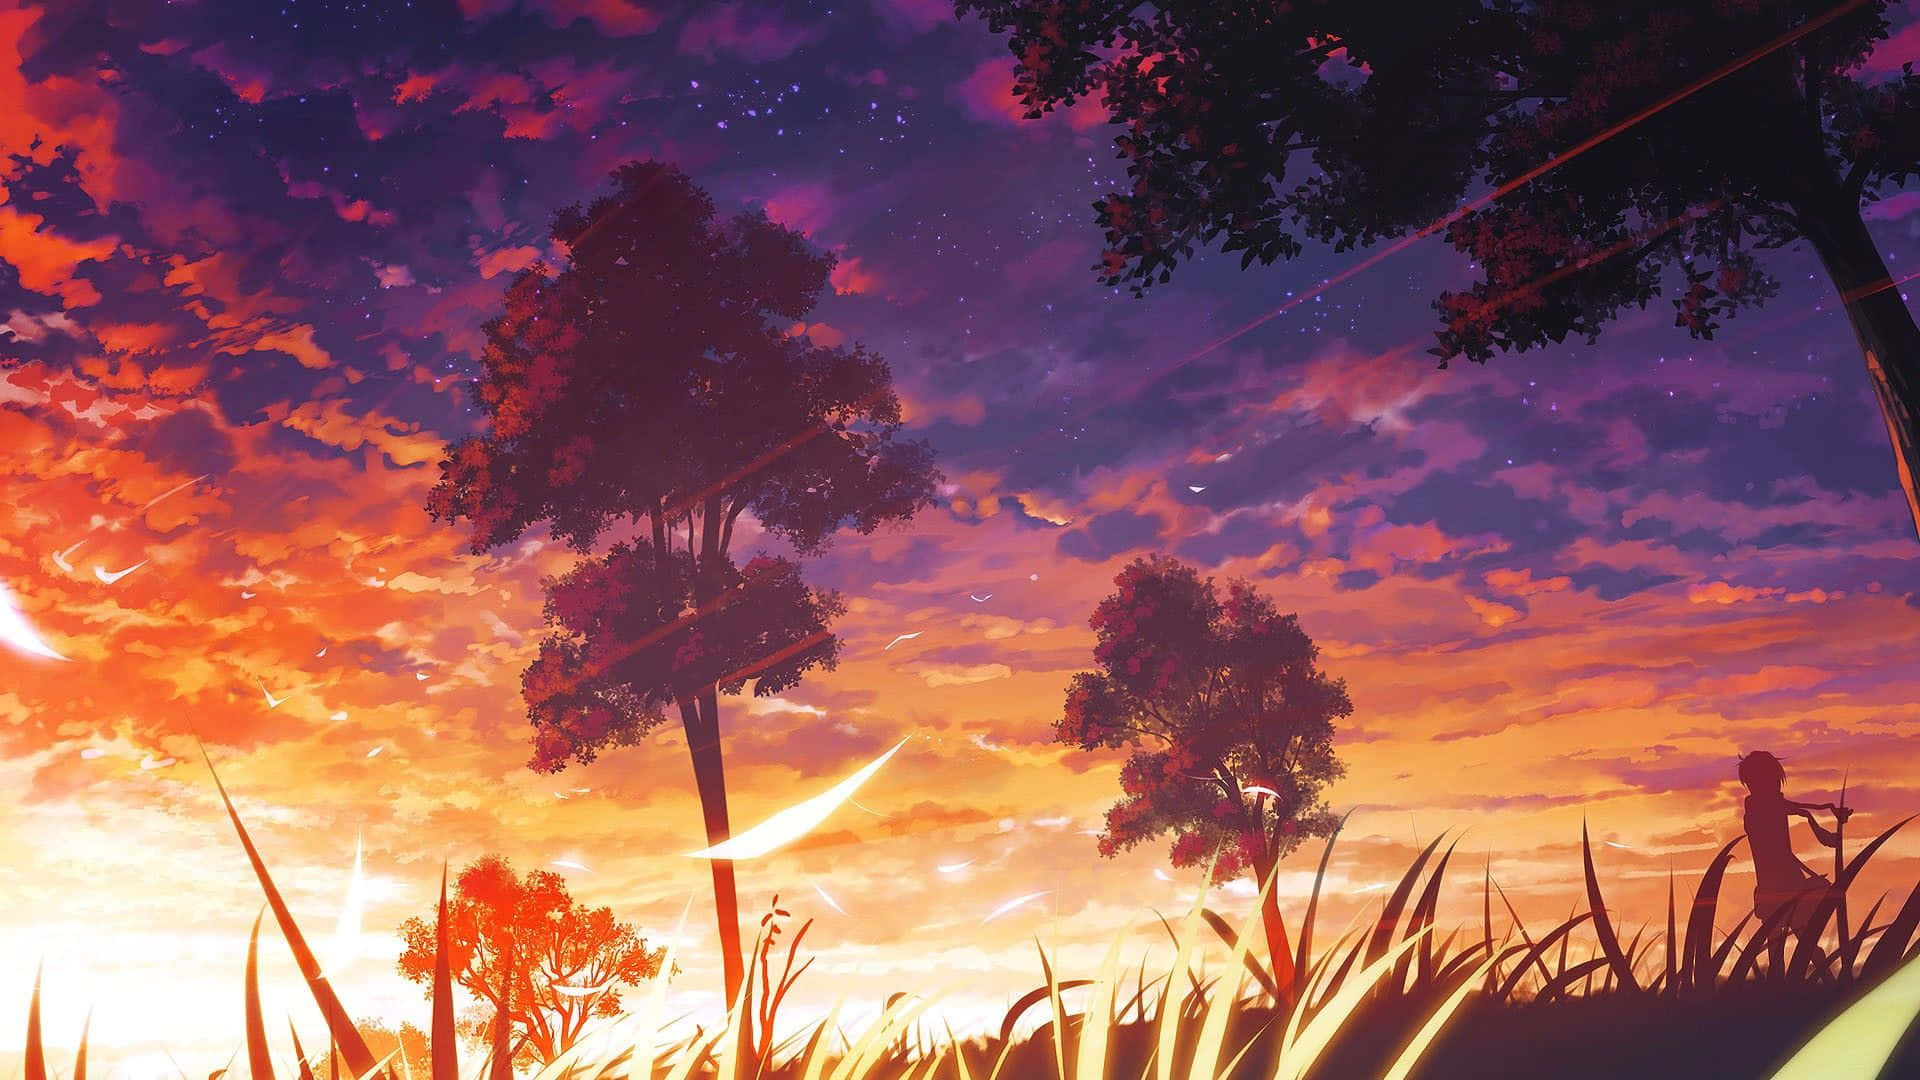 Sunset (anime style) by AndreaKoroveshi on DeviantArt